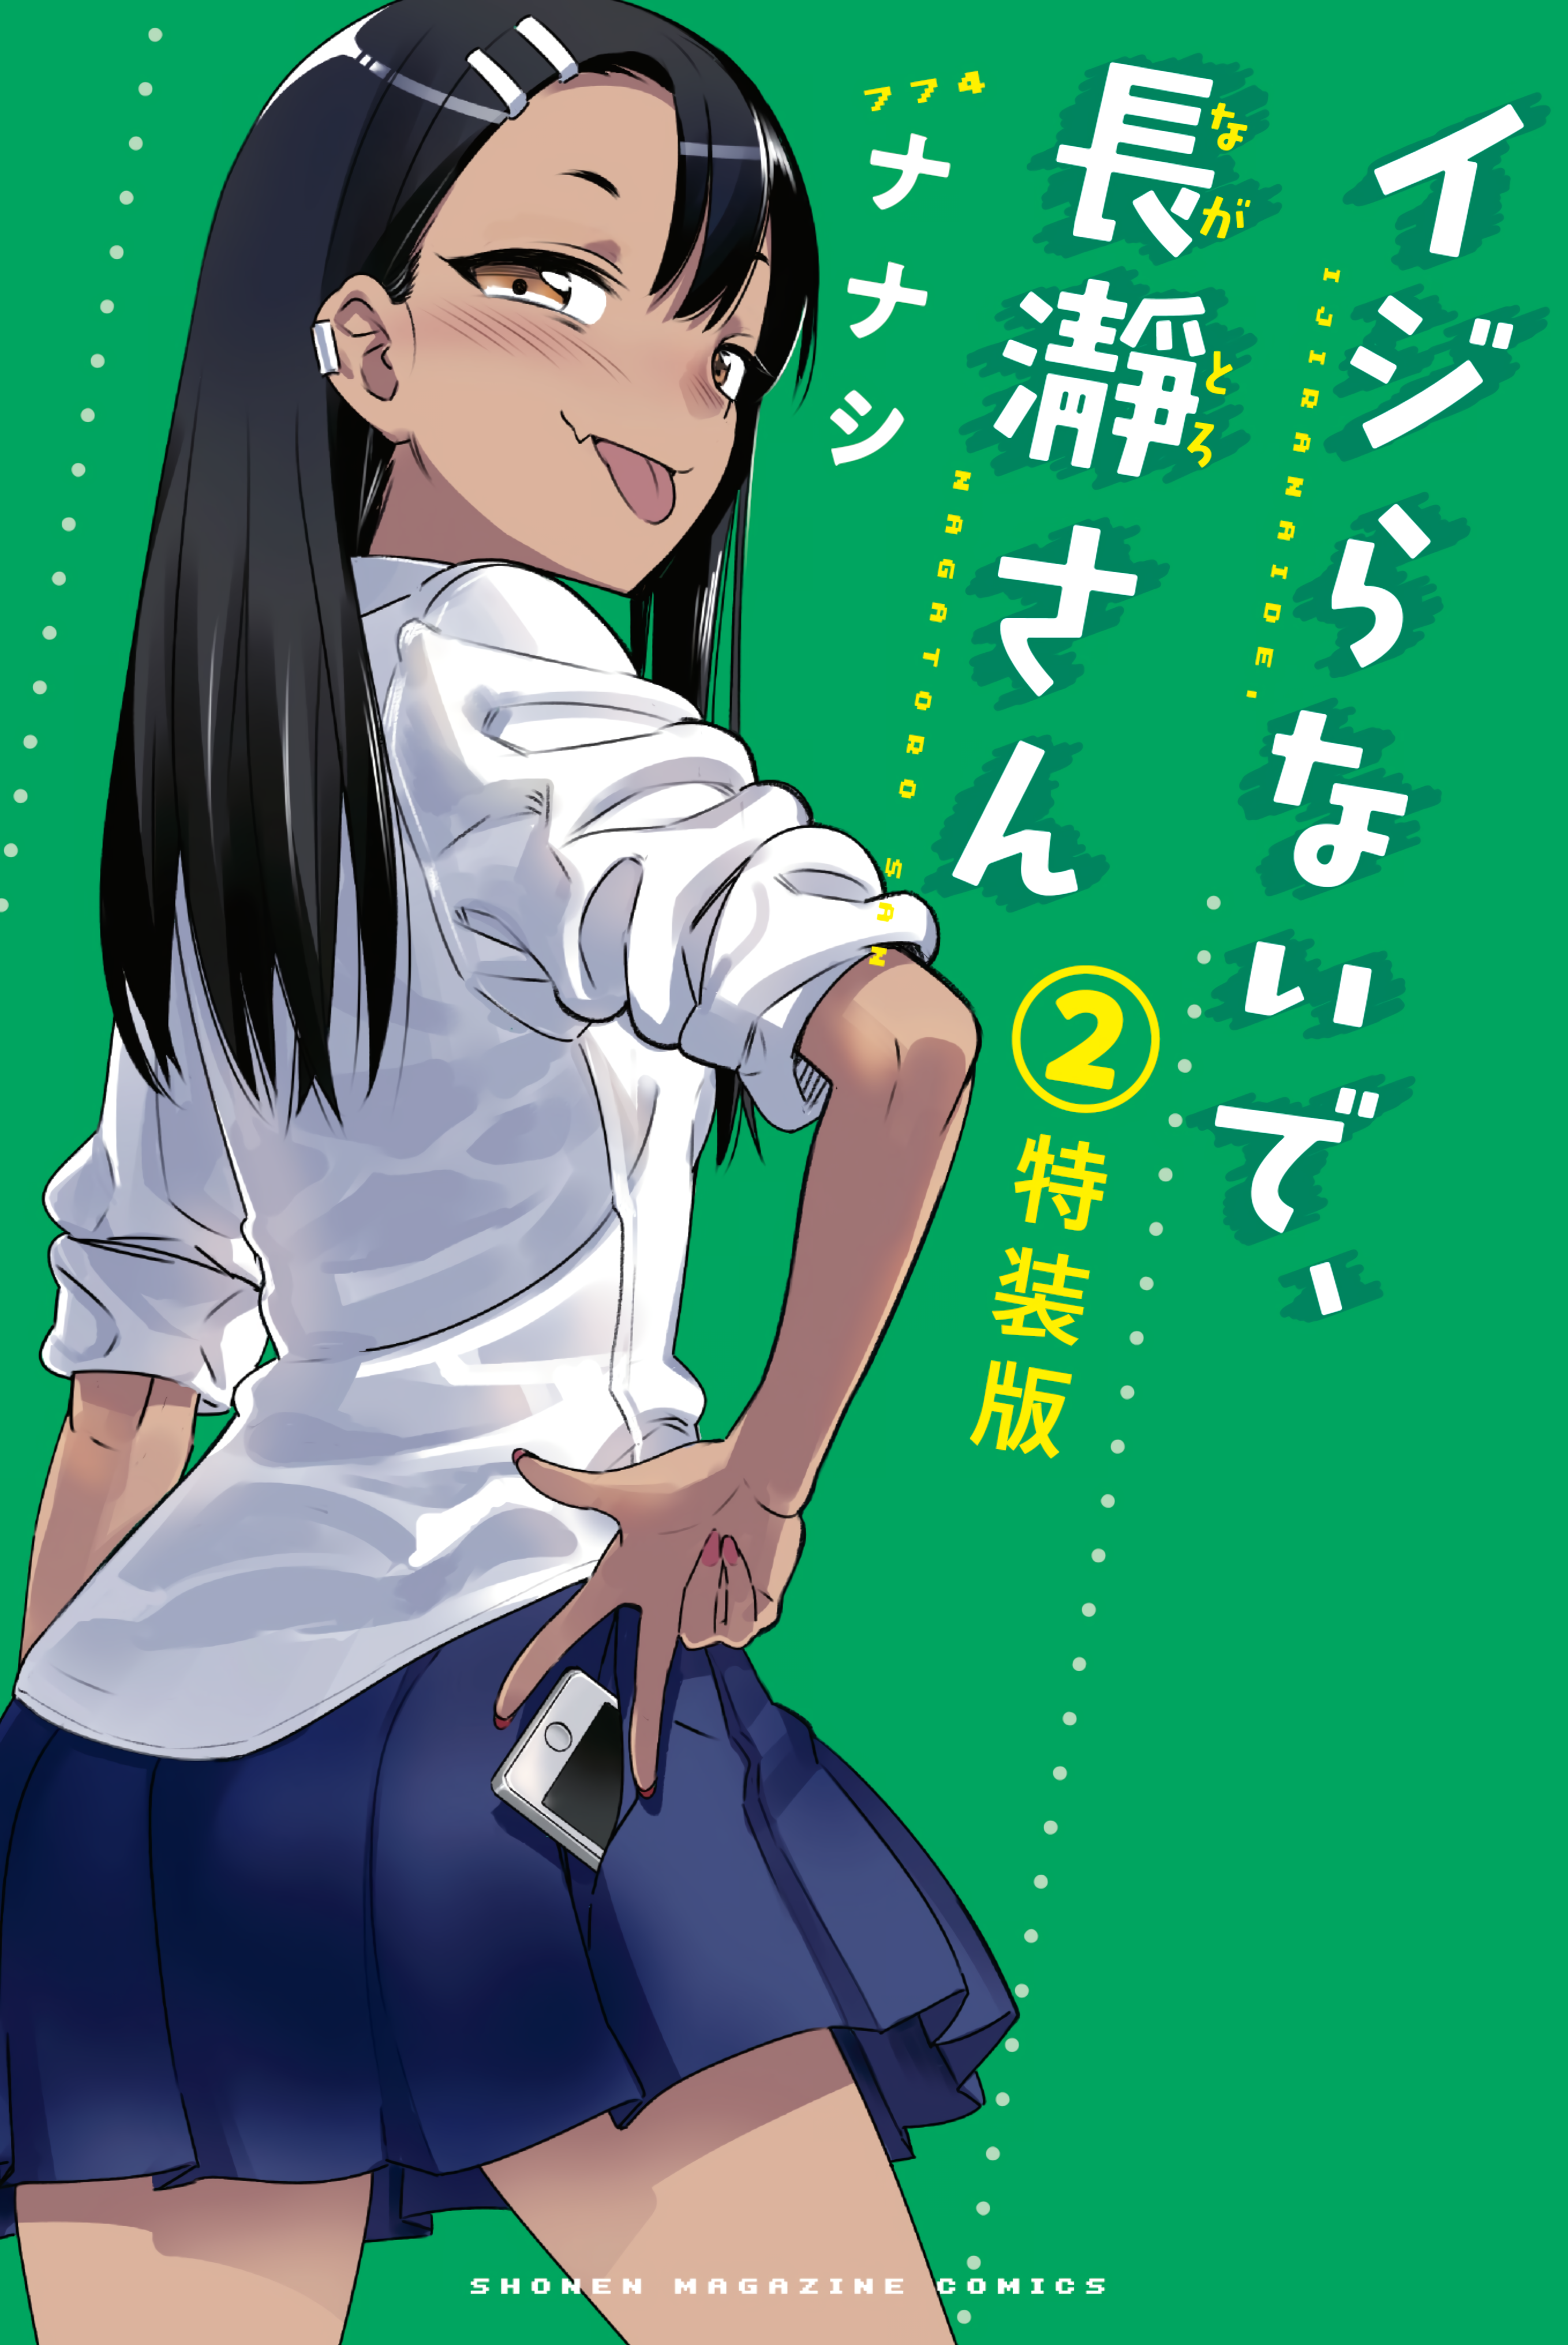 Read Ijiranaide, Nagatoro-san Manga Chapter 1 in English Free Online